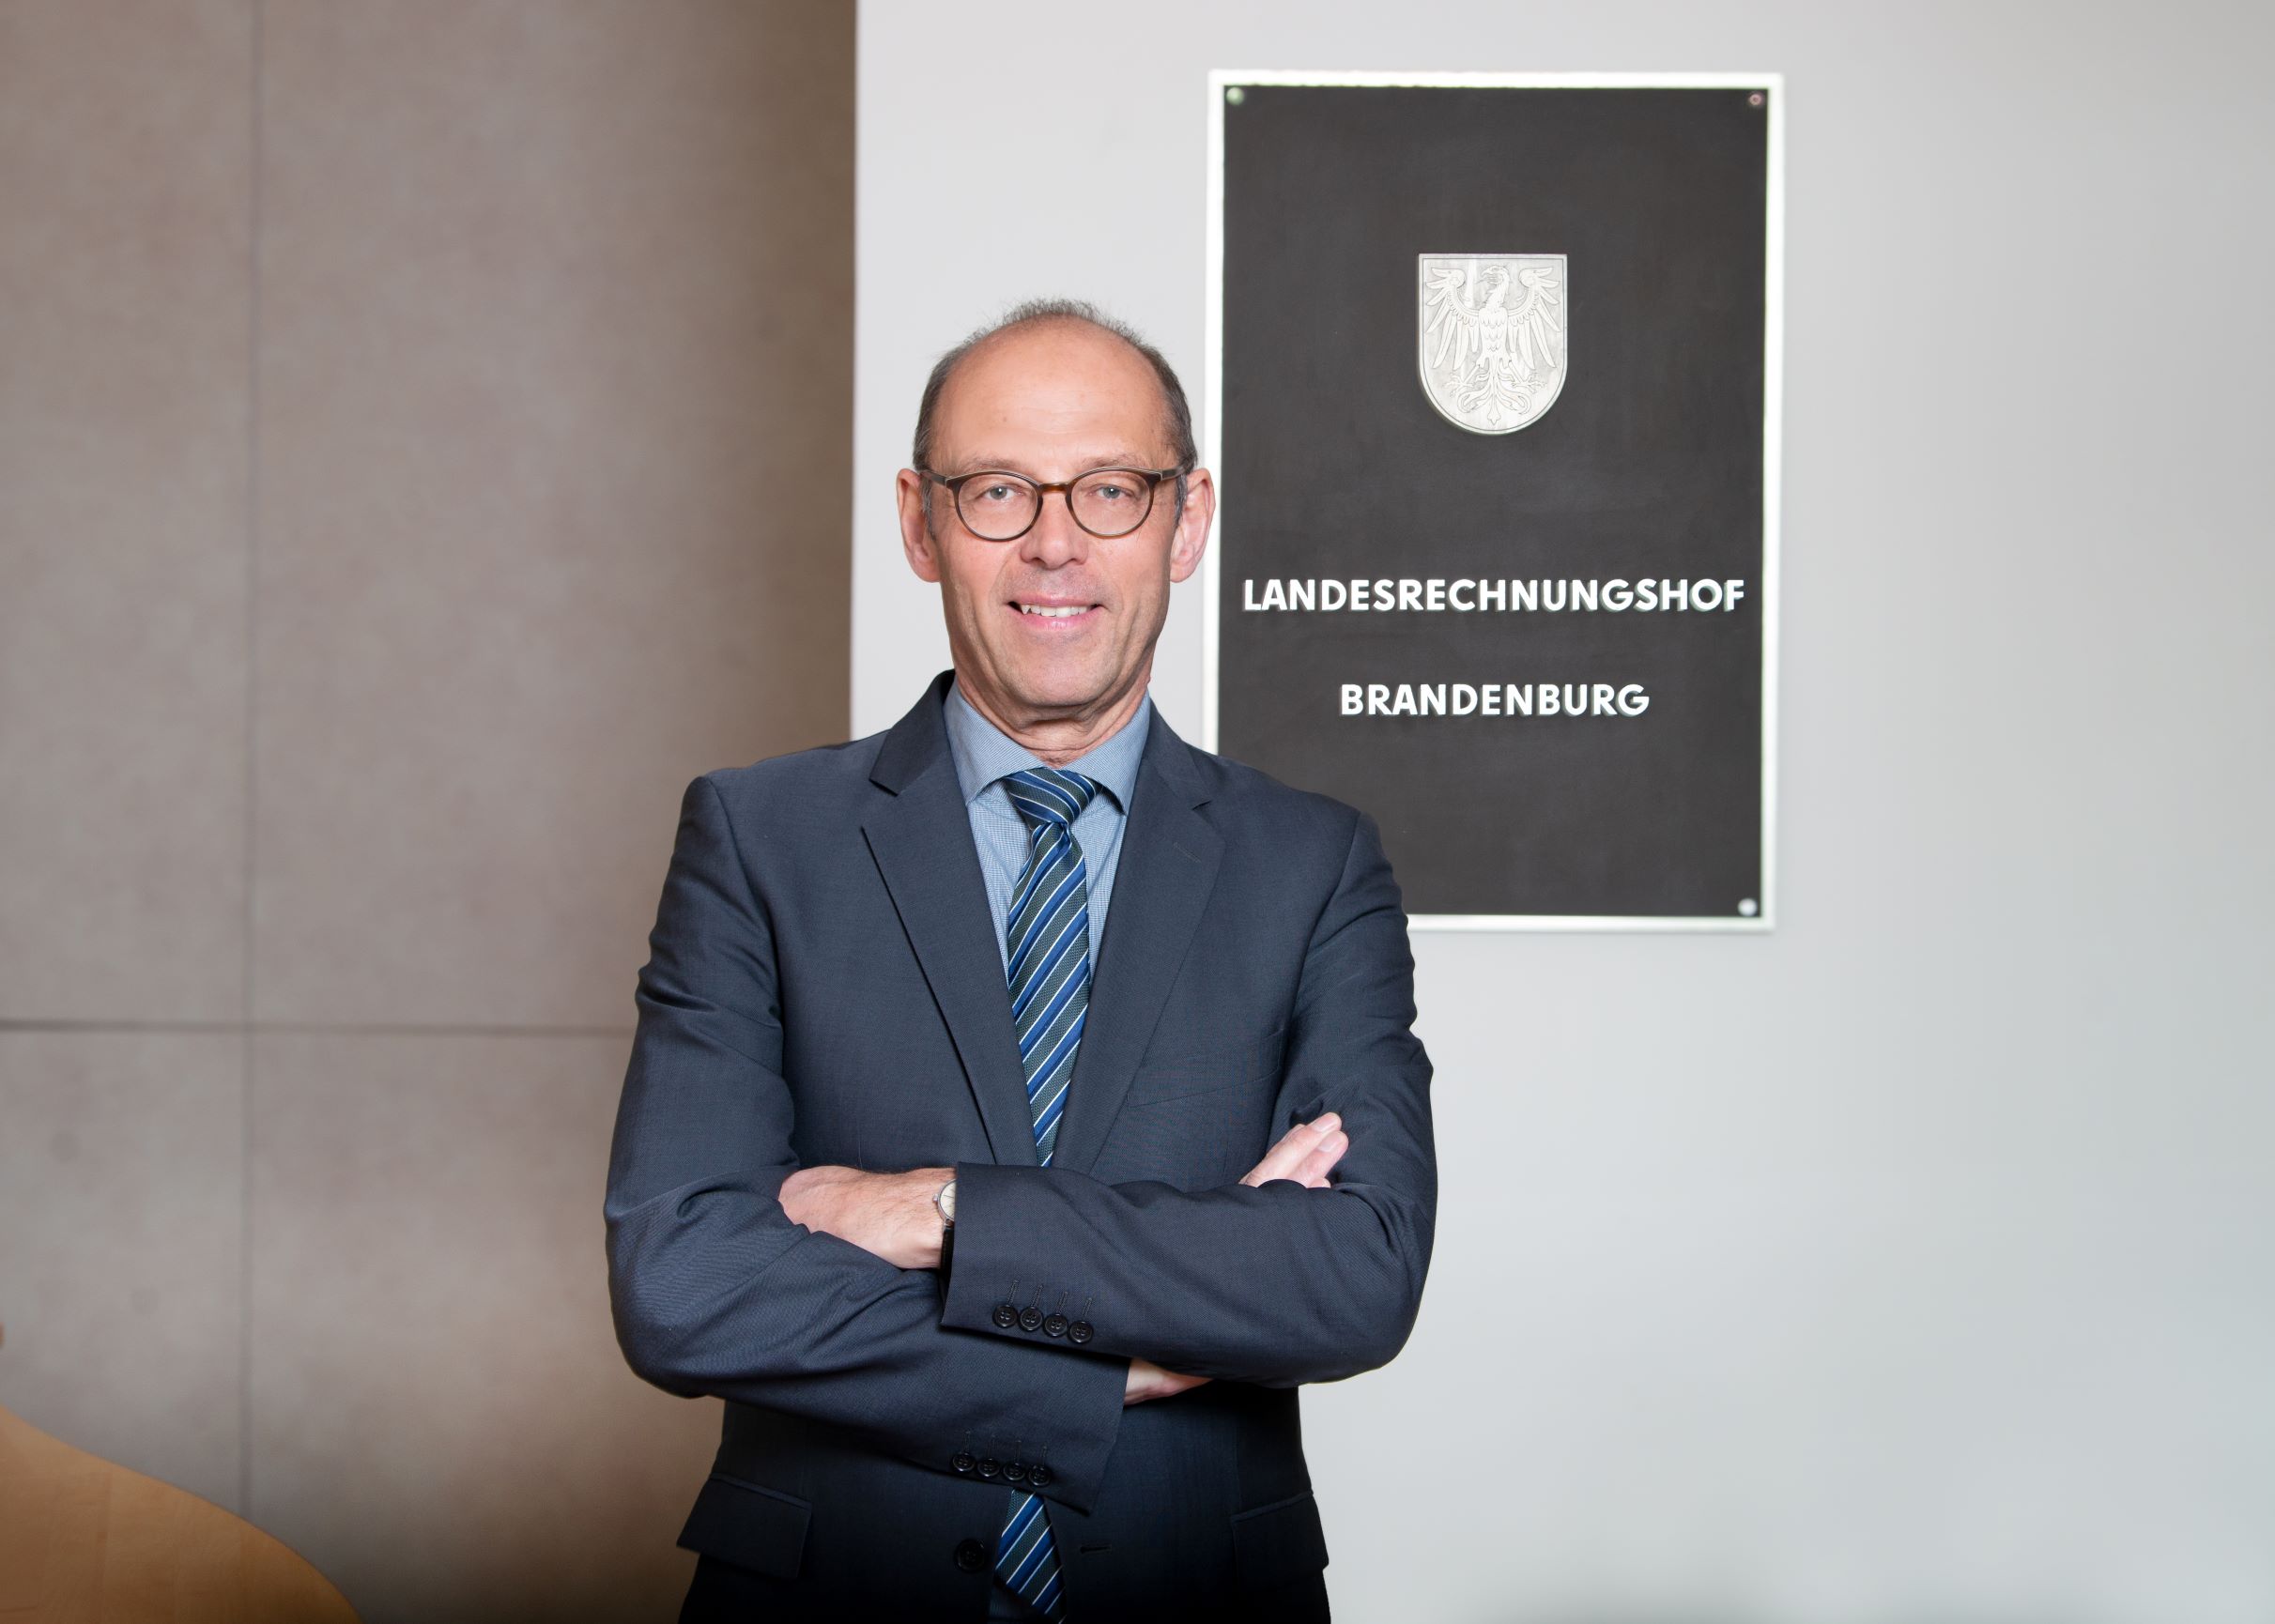 Christoph Weiser, Präsident des Landesrechnungshofs Brandenburg (c) Landesrechnungshof Brandenburg/jakobundluisa, 2021